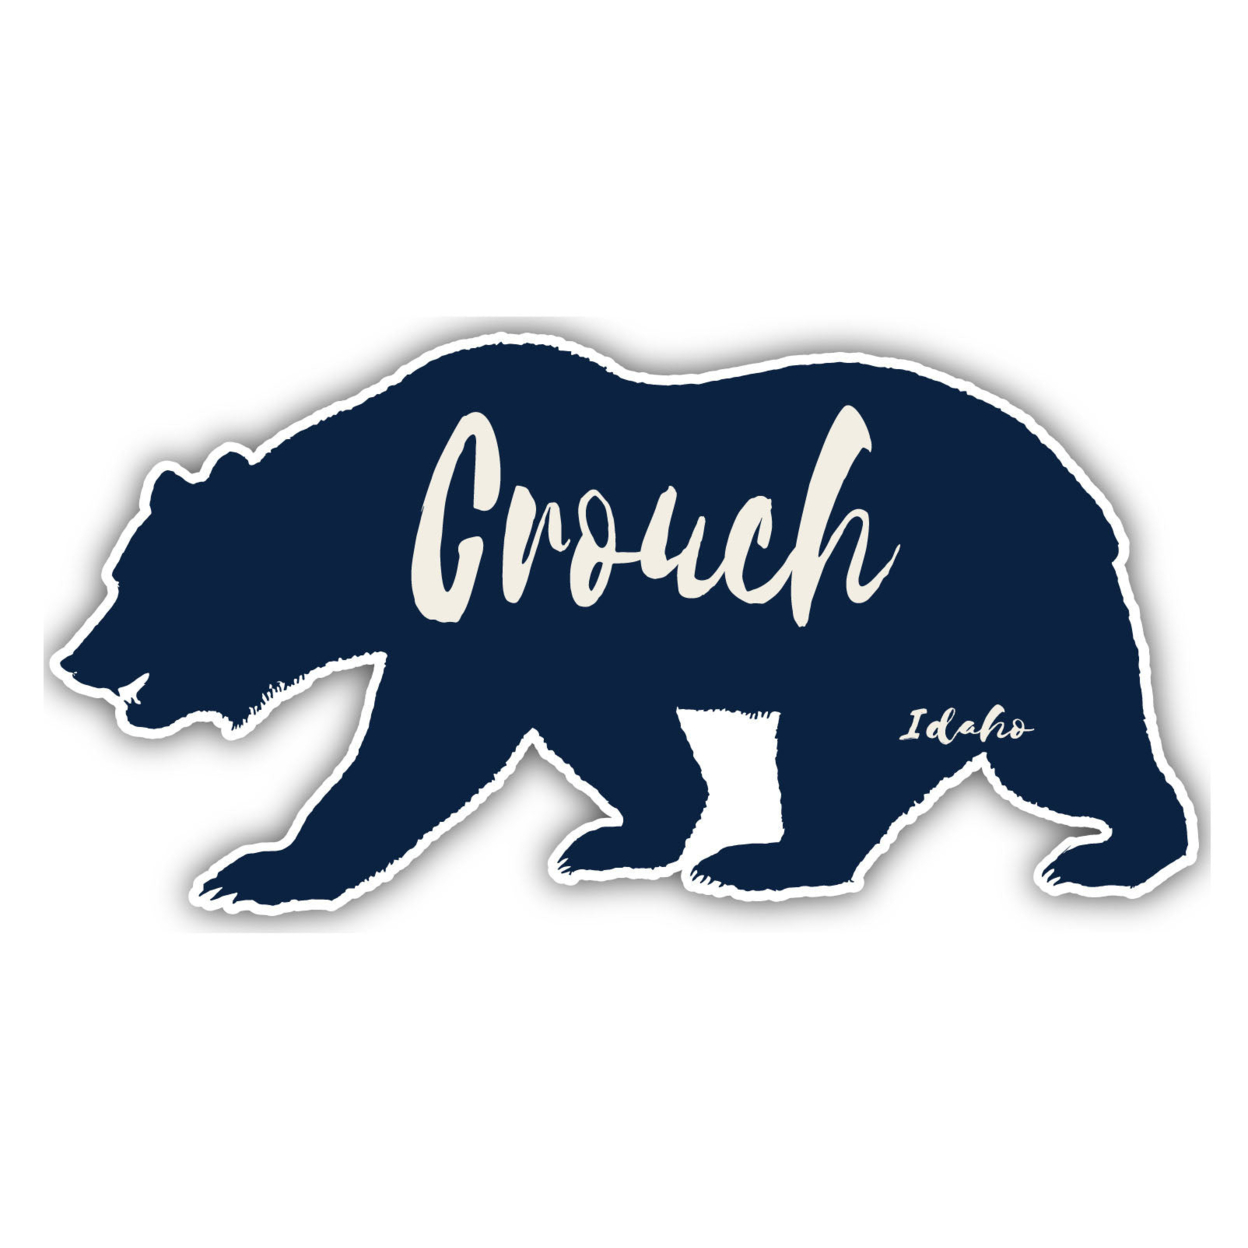 Crouch Idaho Souvenir Decorative Stickers (Choose Theme And Size) - Single Unit, 6-Inch, Bear